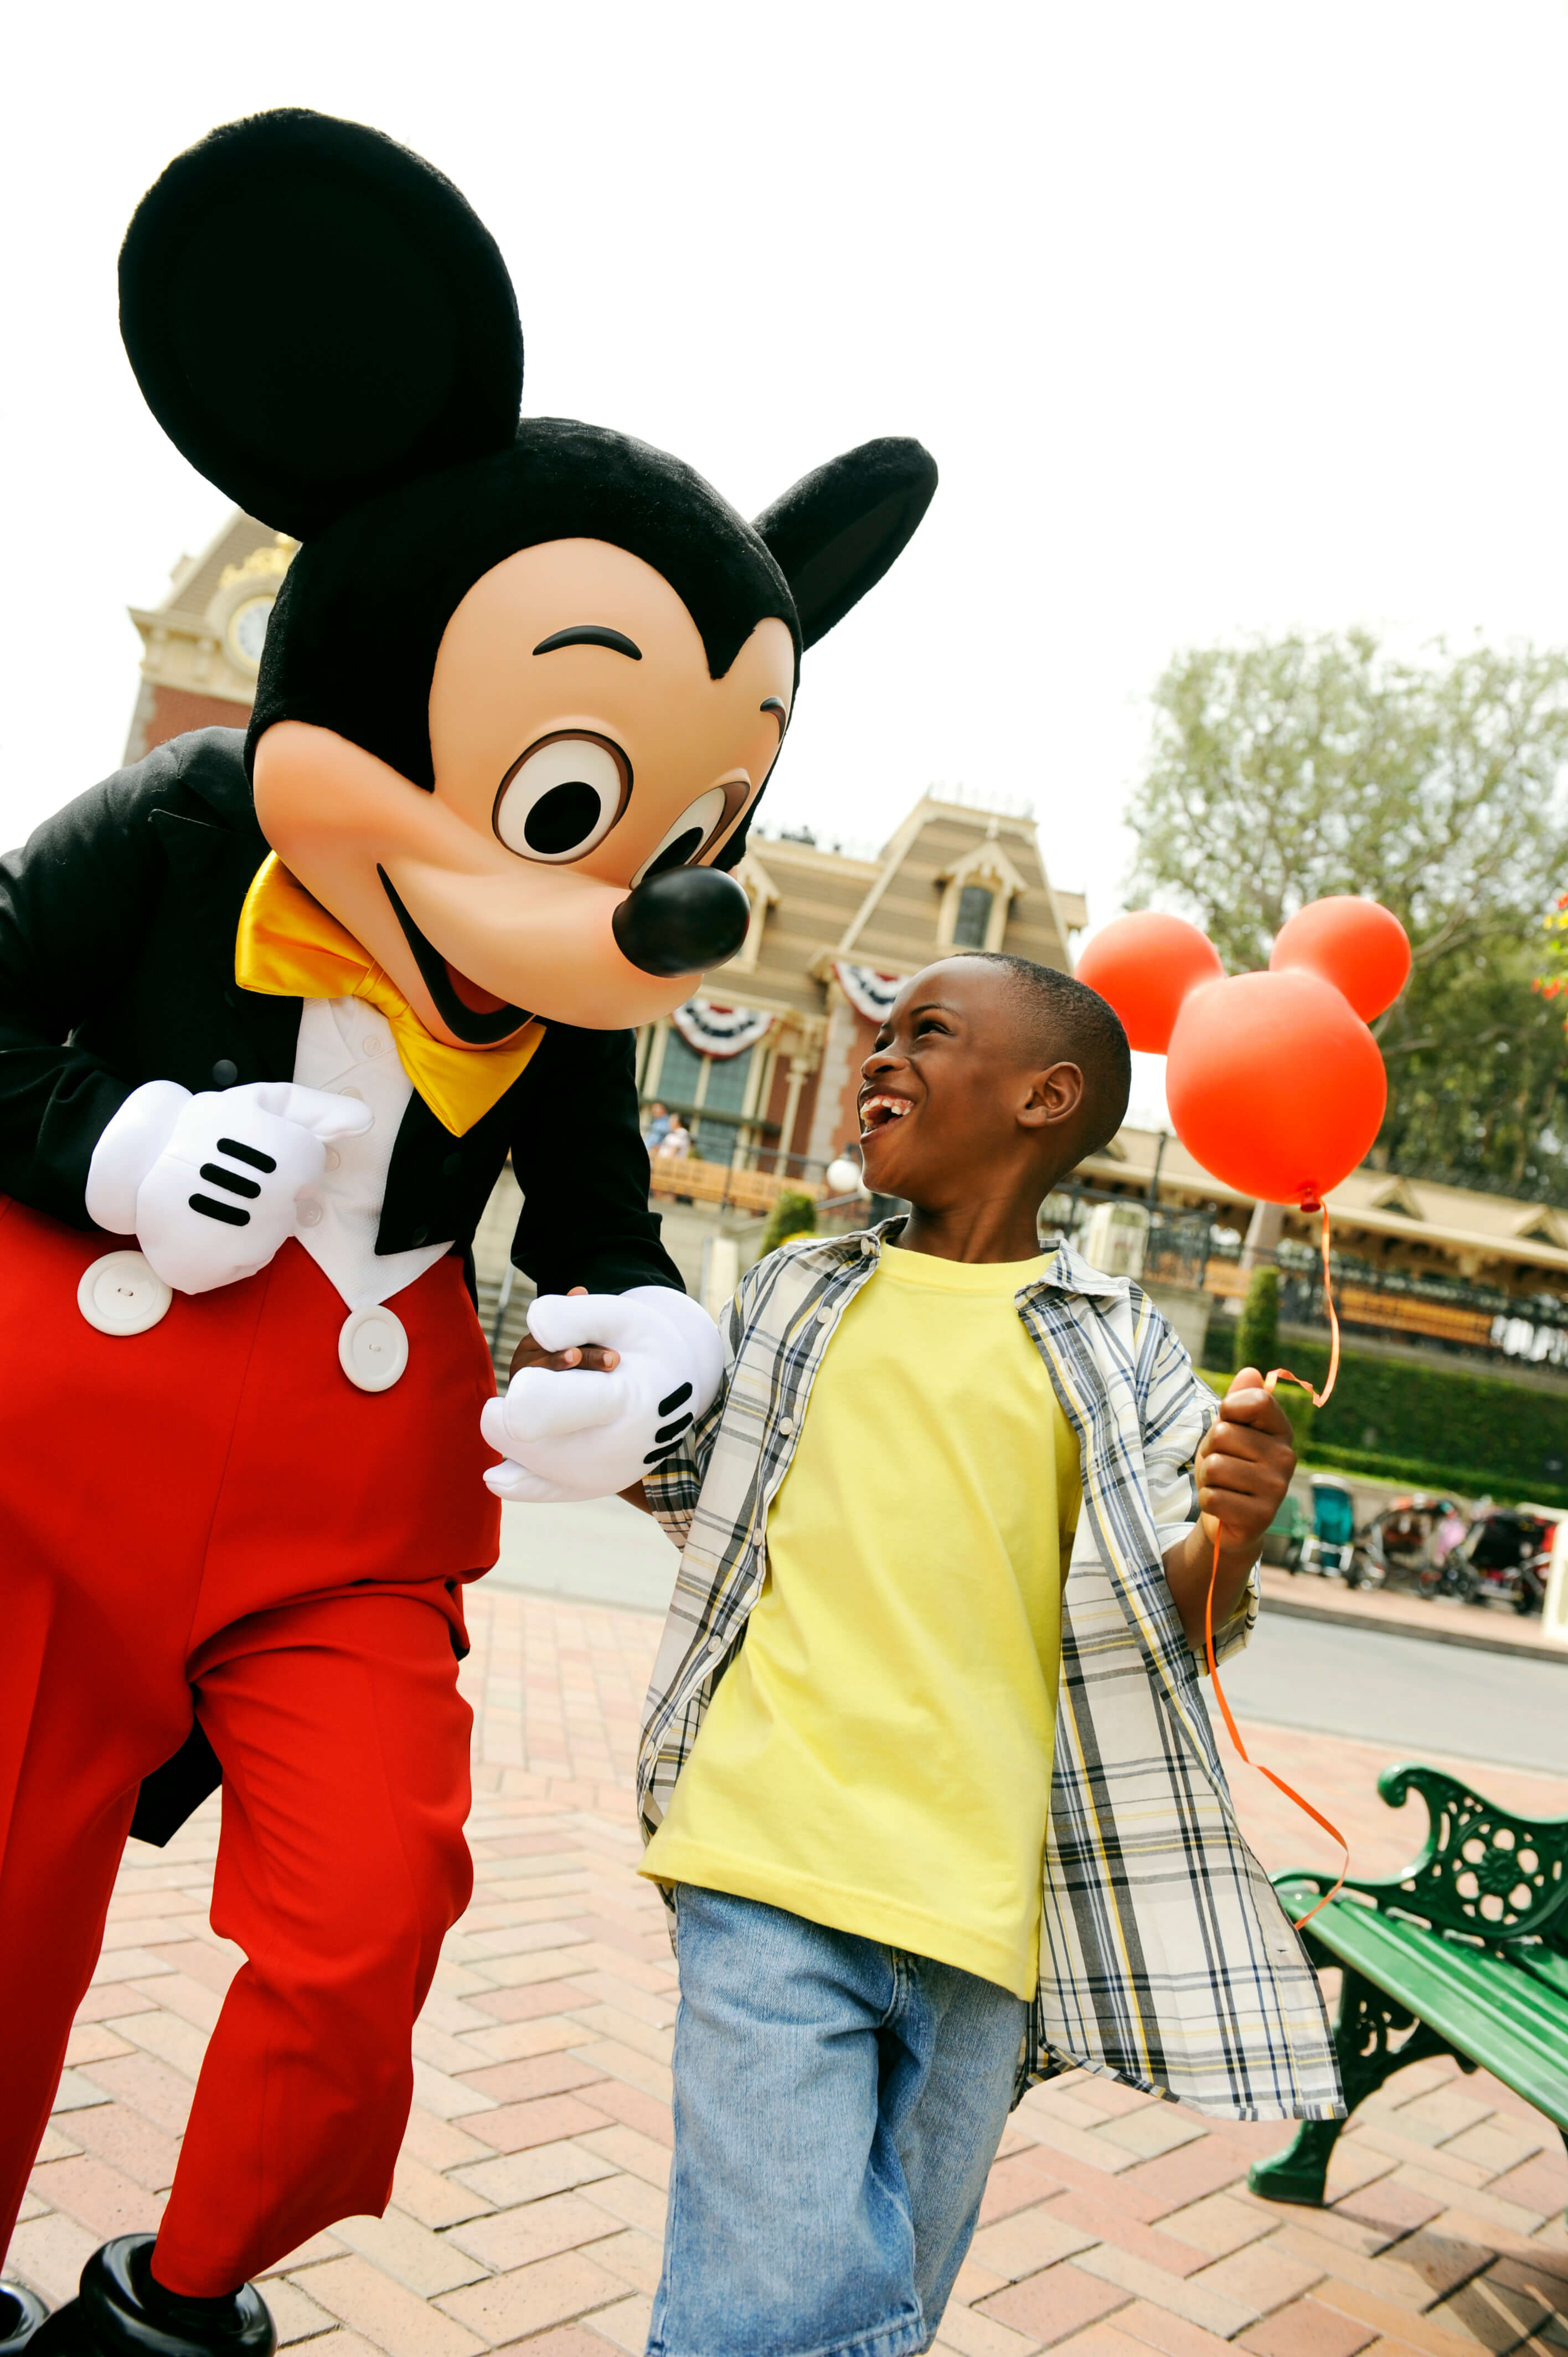 mickey & boy with balloon at Disney World